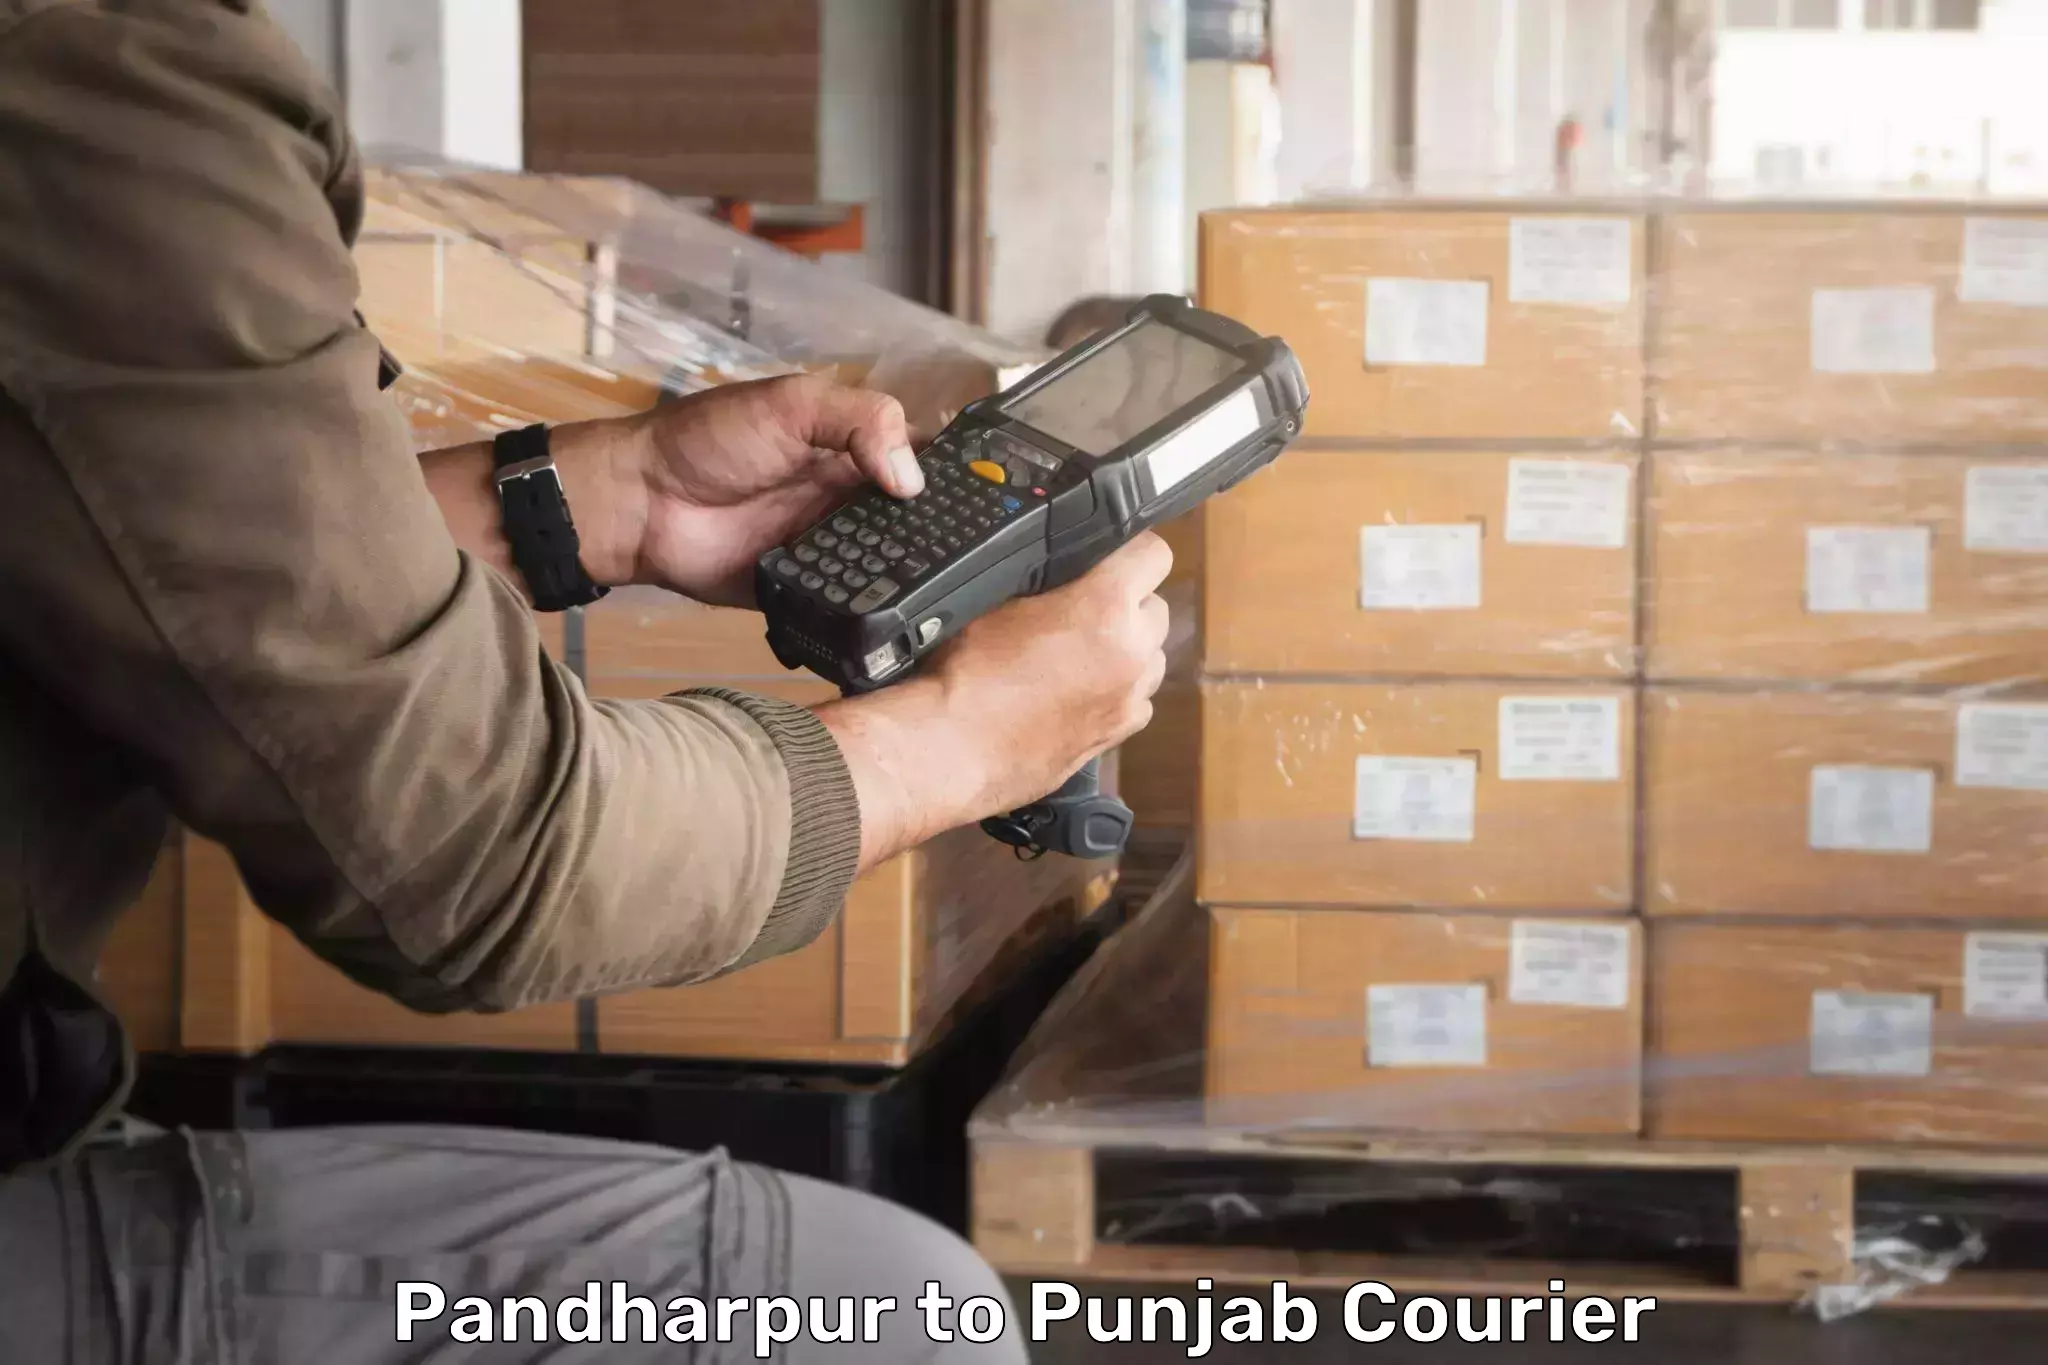 High-capacity parcel service Pandharpur to Amritsar